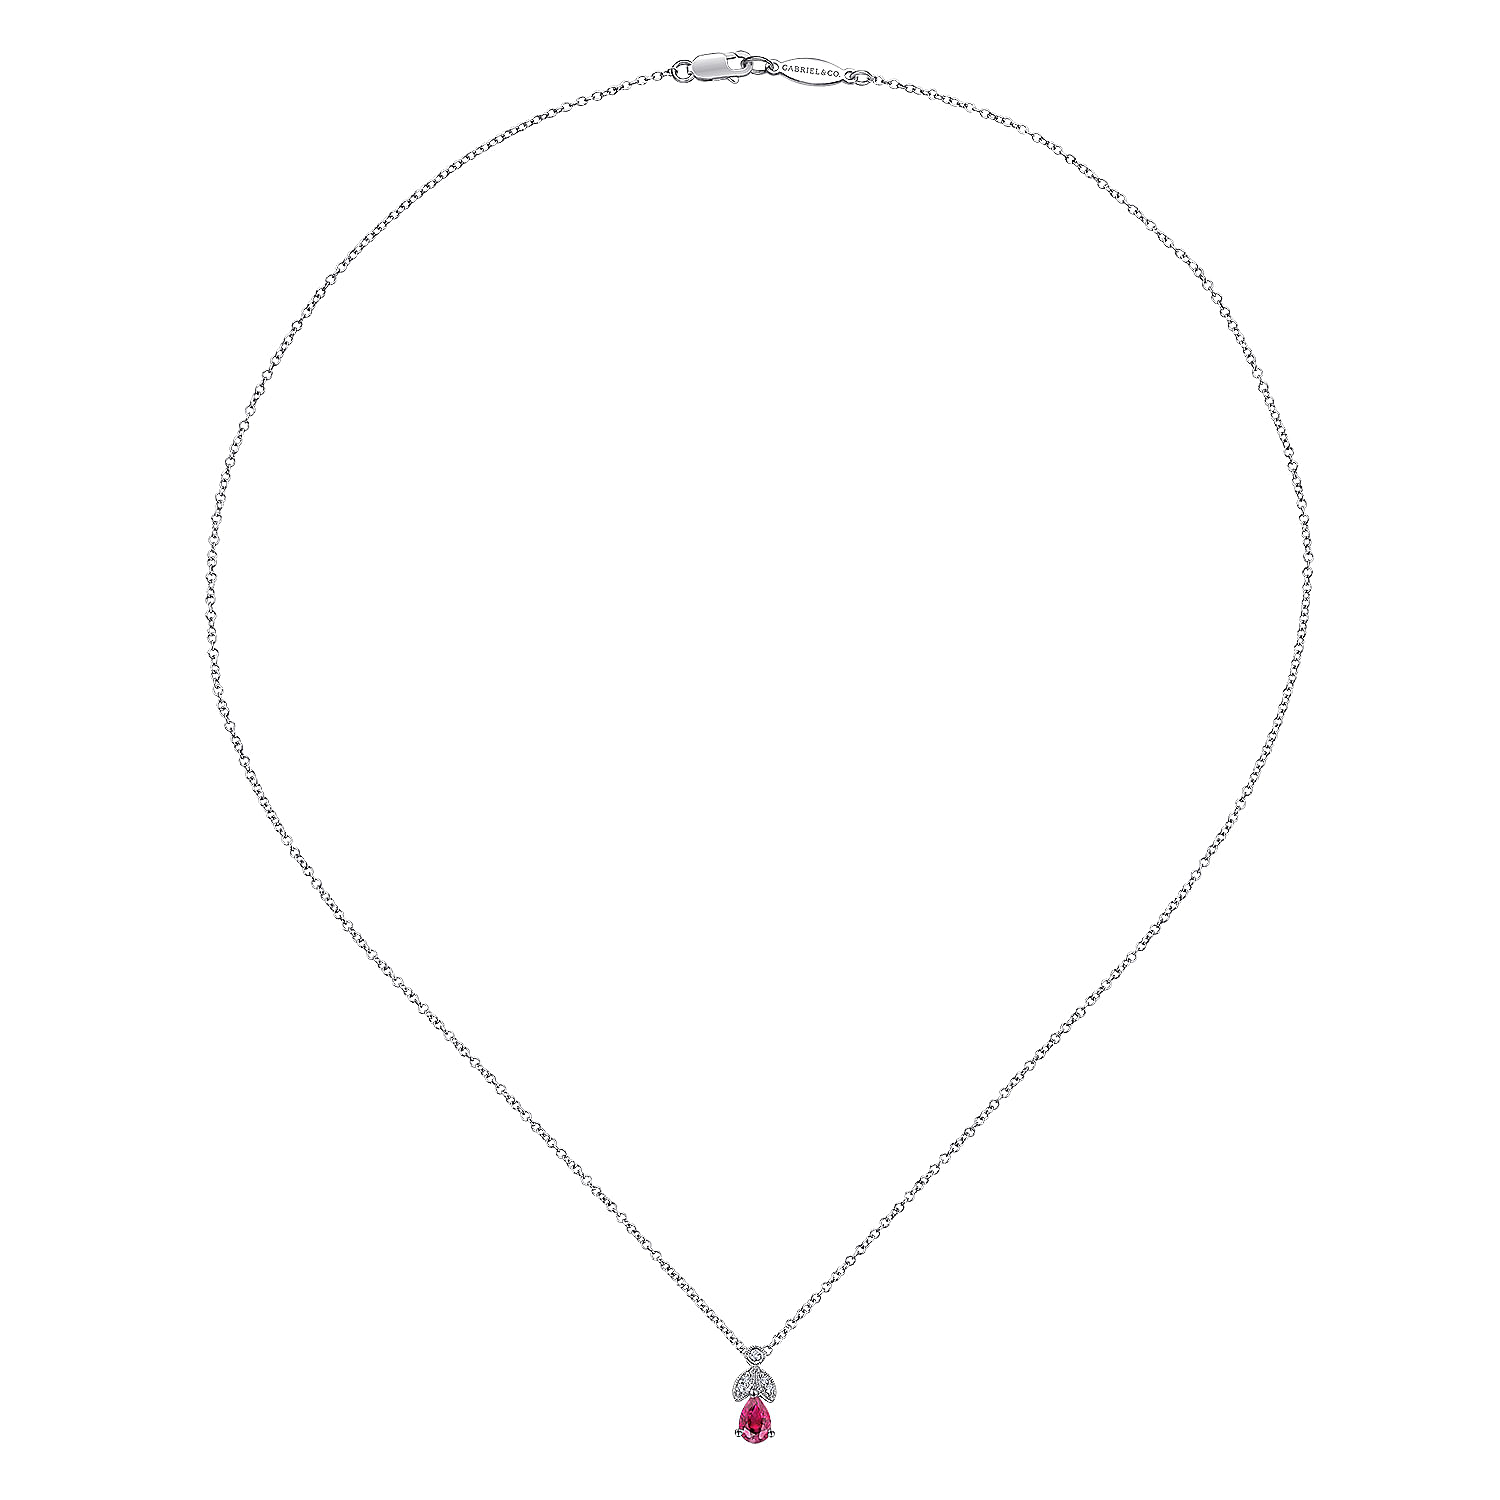 14K White Gold Ruby and Diamond Teardrop Pendant Necklace